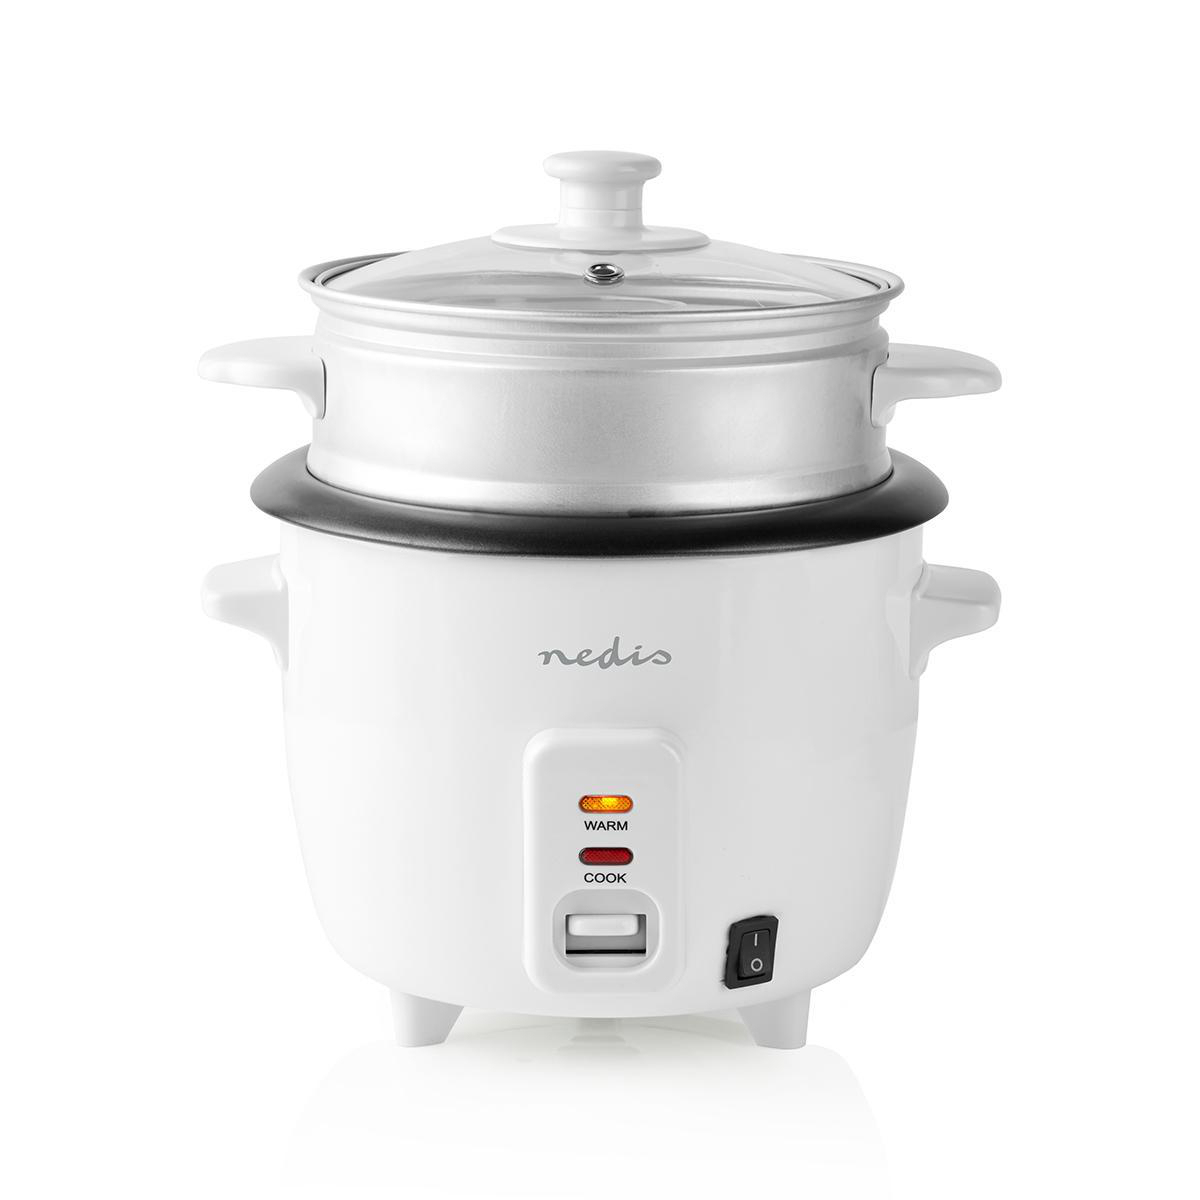 300W, rice cooker, 0.6 lt, alluminium steamer, non-stick coating, removable bowl, Nedis